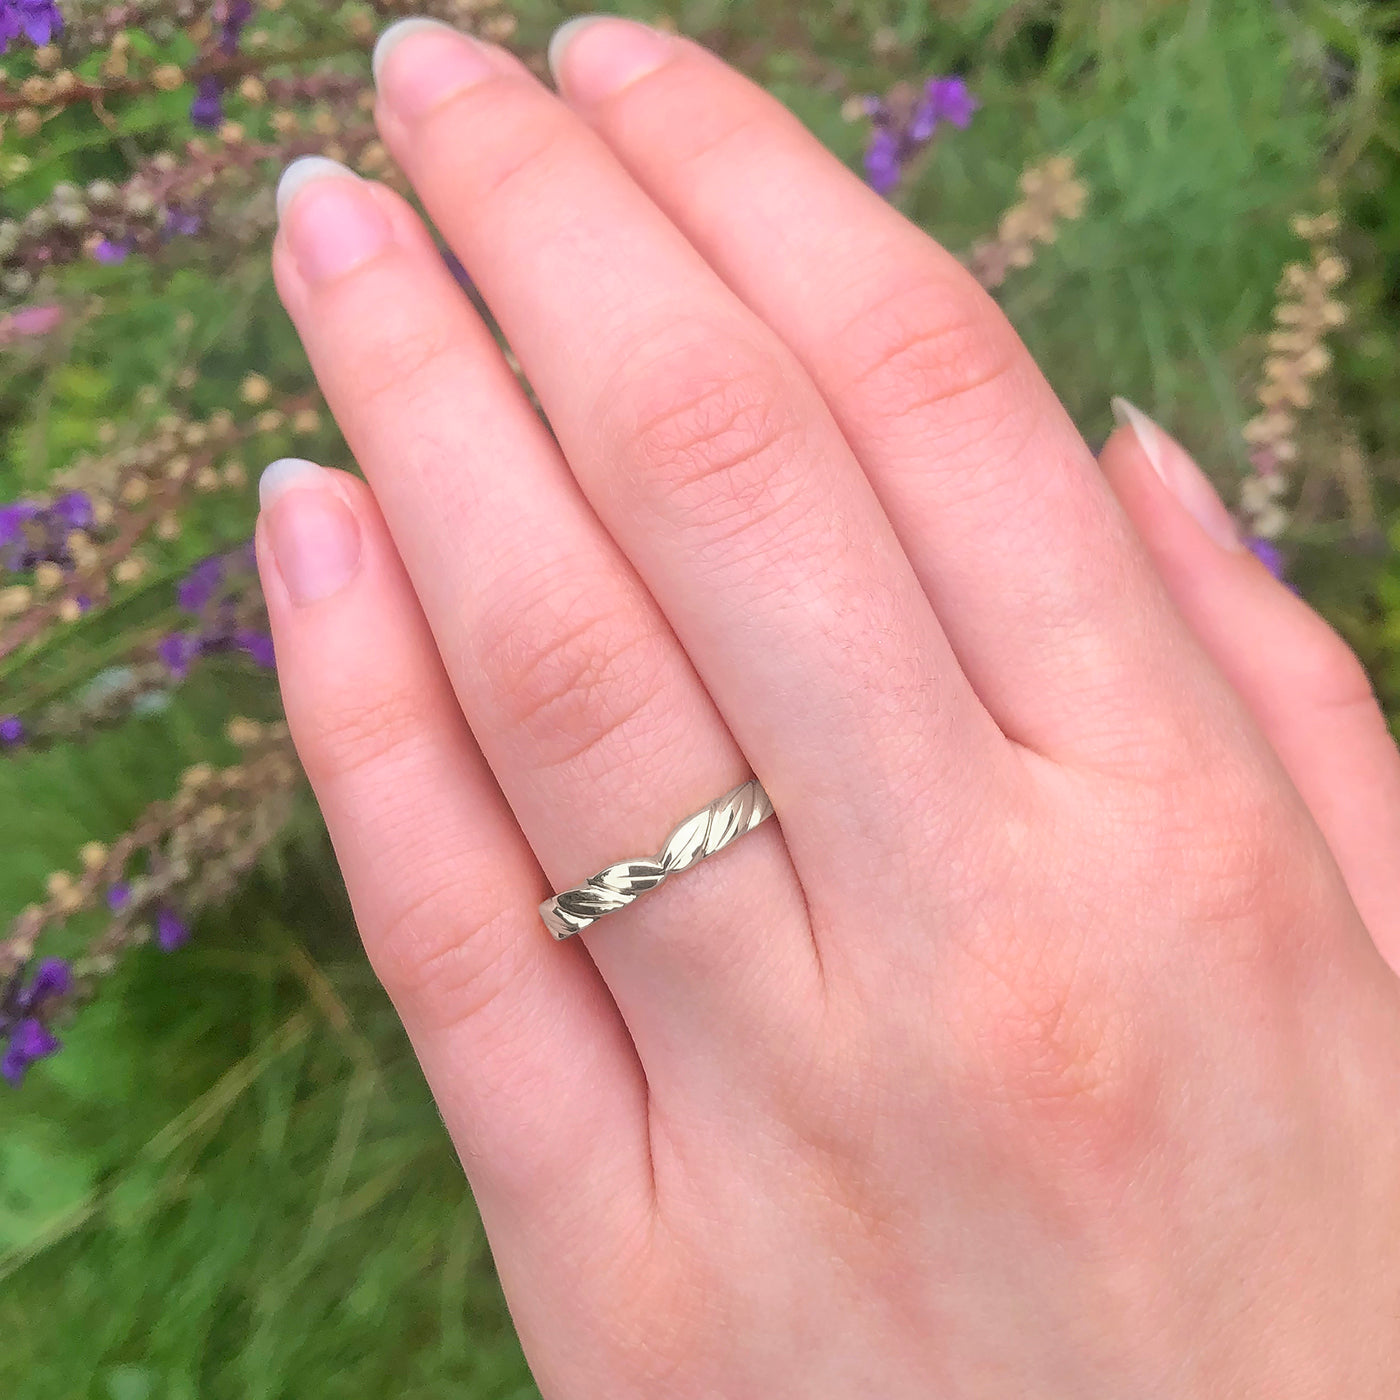 18ct White Gold Leaf Wedding Ring